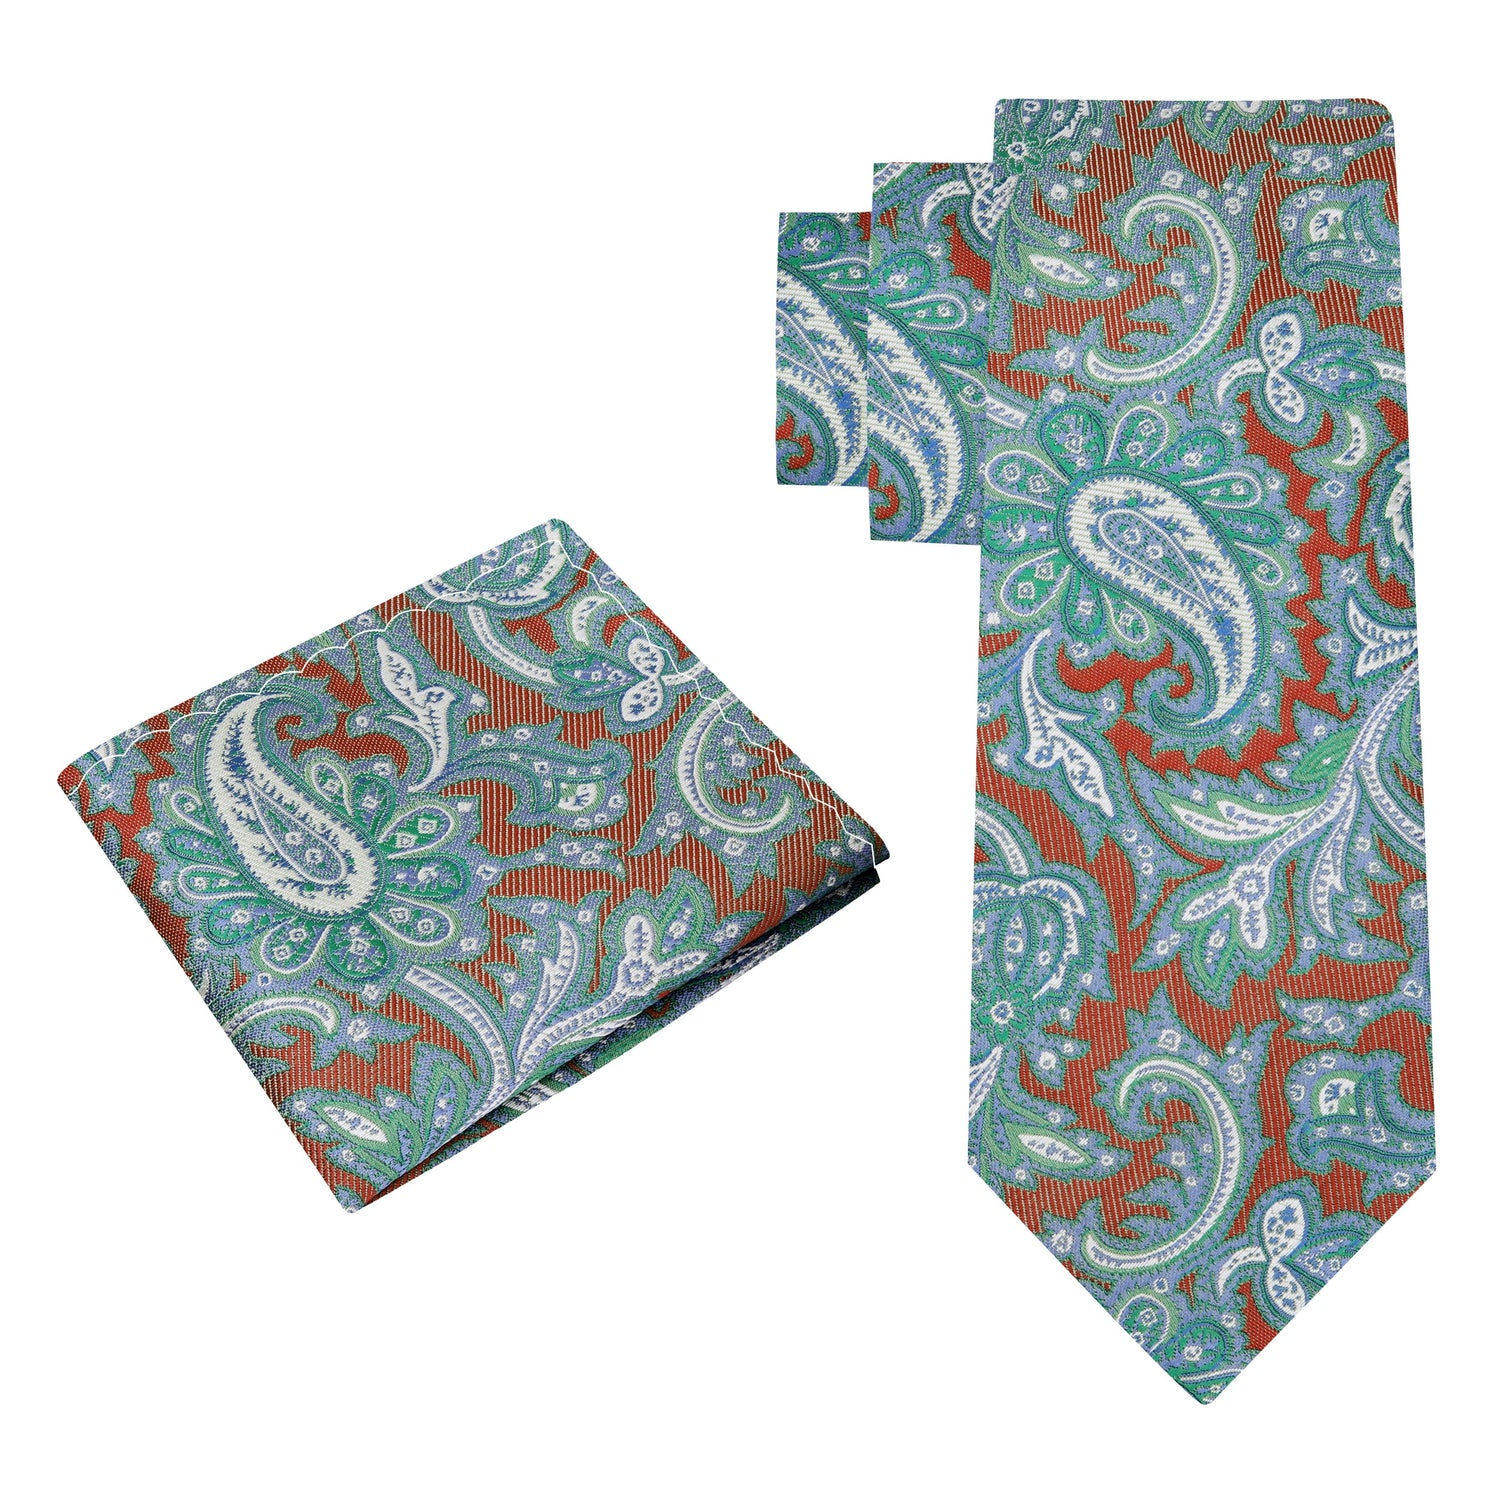 Alt View: A Orange Intricate Paisley Silk Necktie, Matching Pocket Square